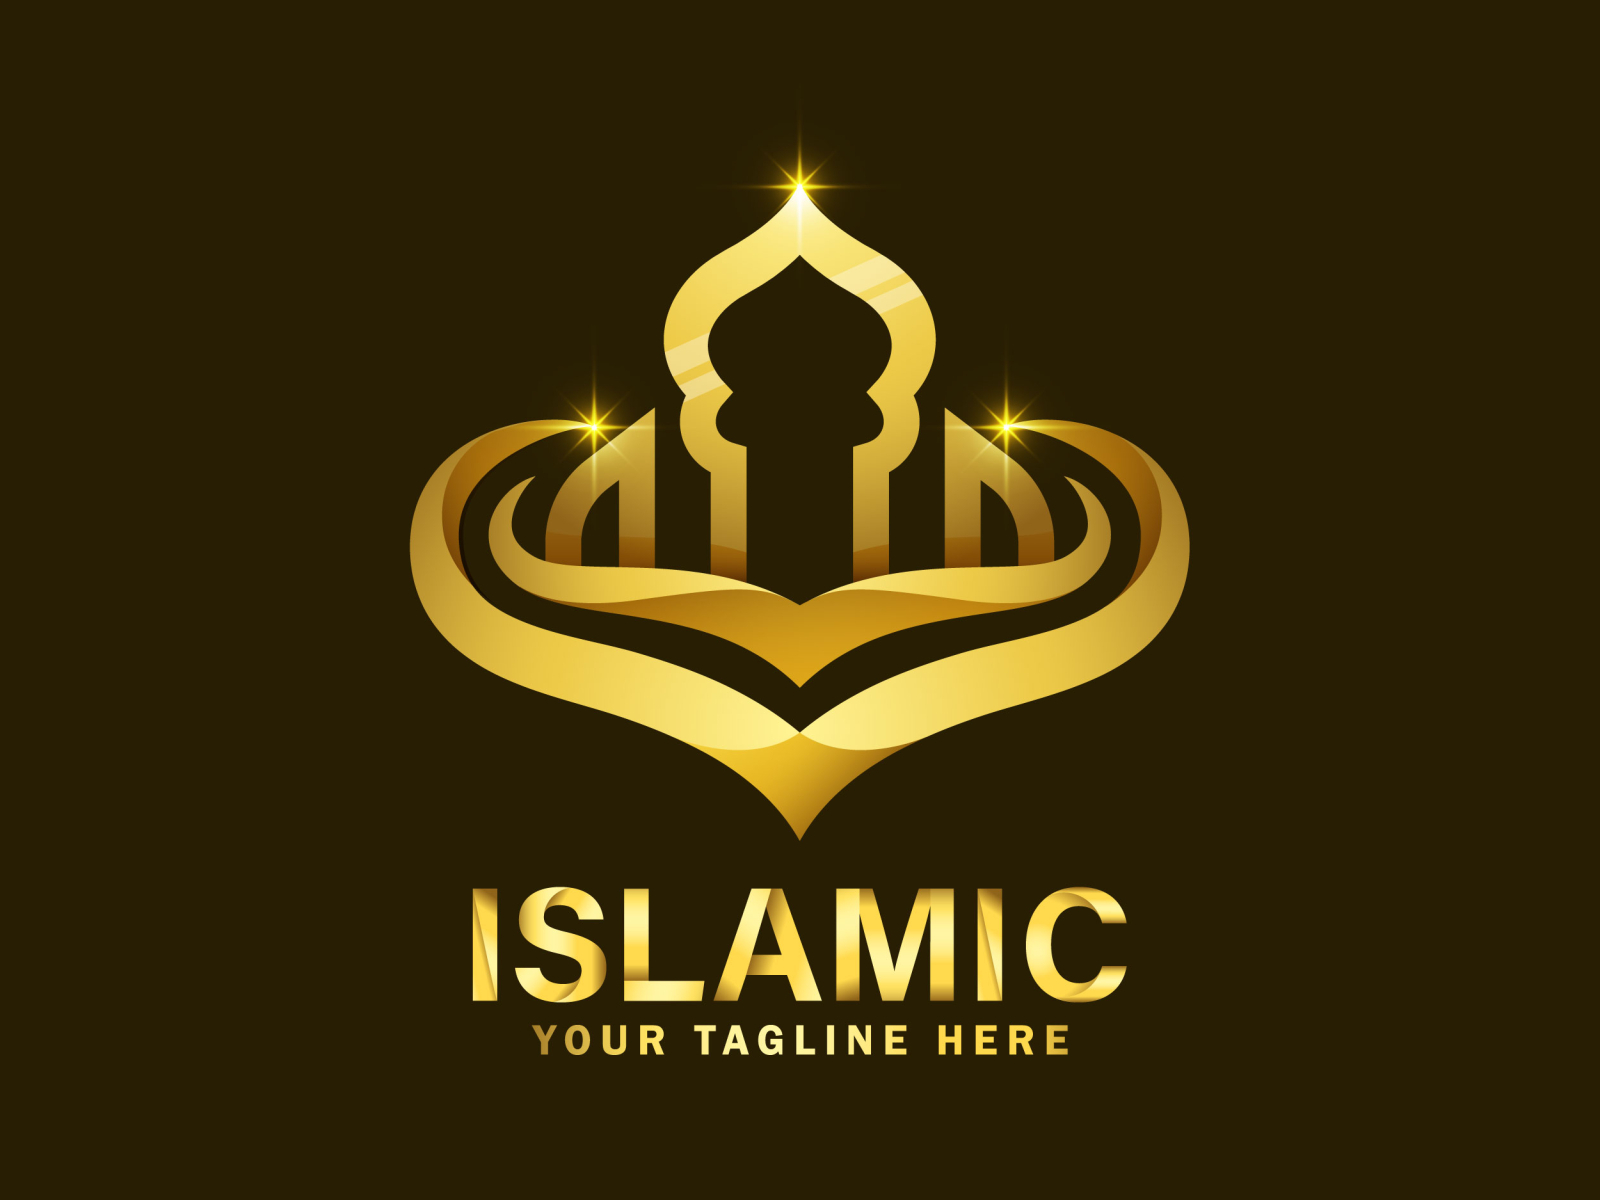 Logo Design for Islamic foundation or team by Mustafa Sadik Seraji-3d ...